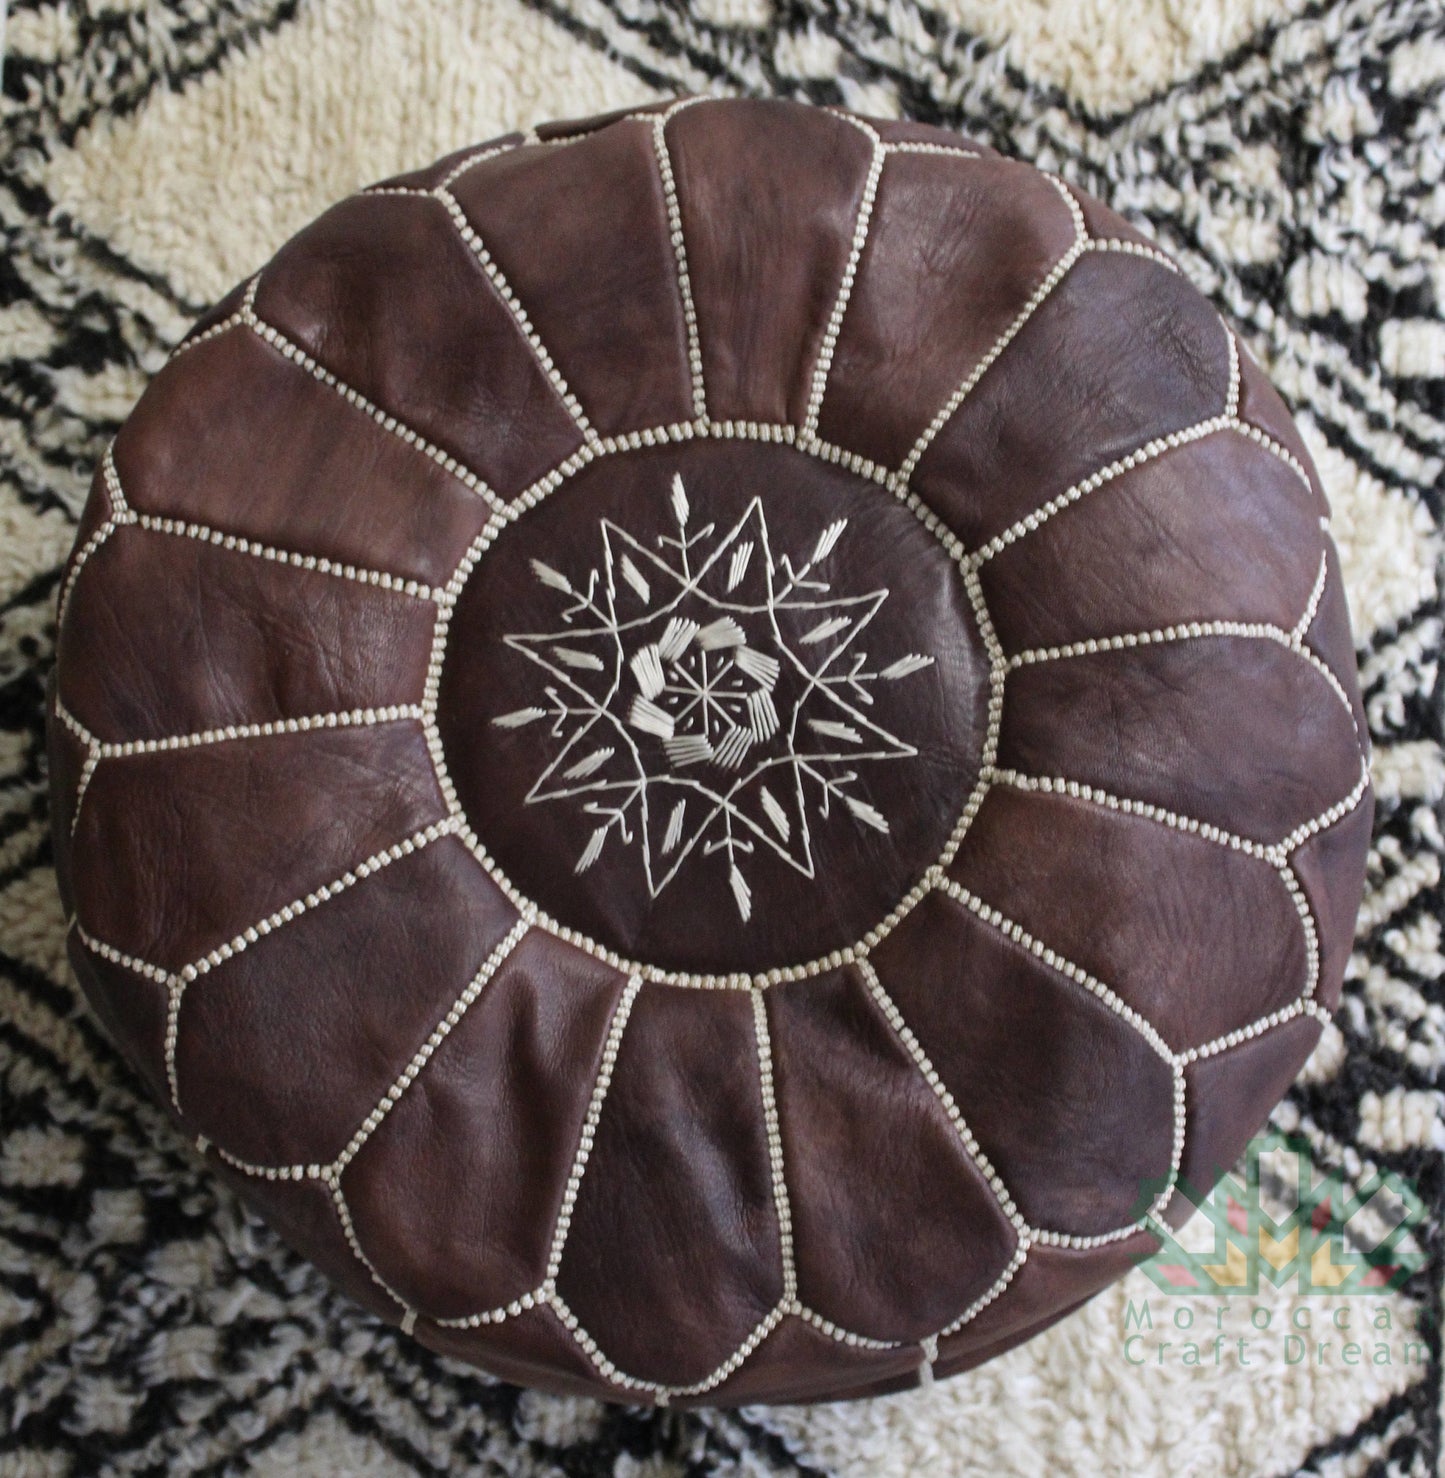 Luxury Leather Ottoman Chocolate MRP1CH